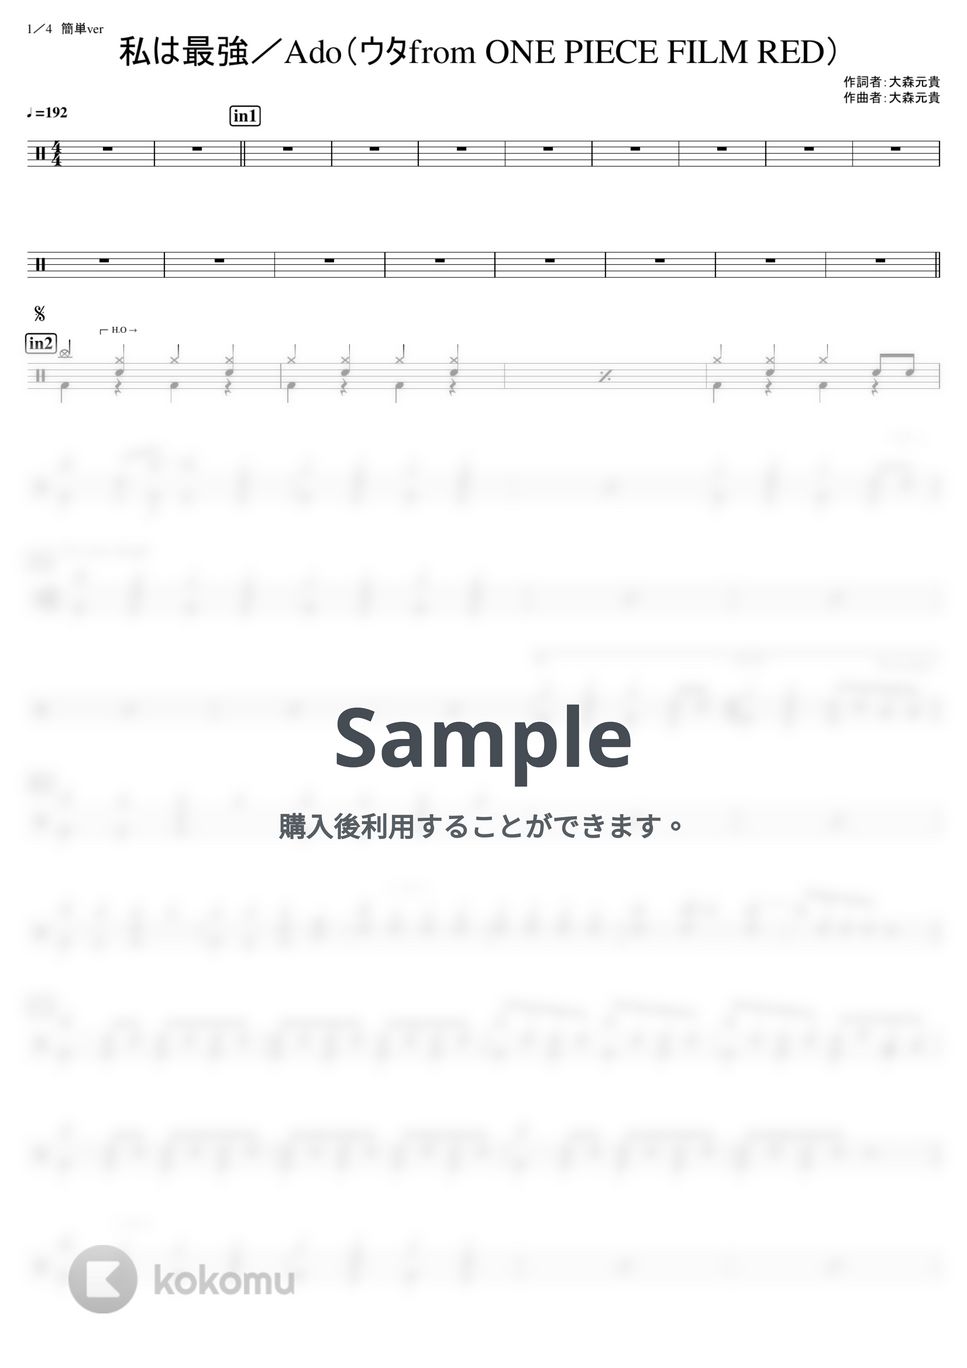 Ado (ウタfrom ONE PIECE) - 私は最強 (難易度別セット) by kamishinjo-drum-school